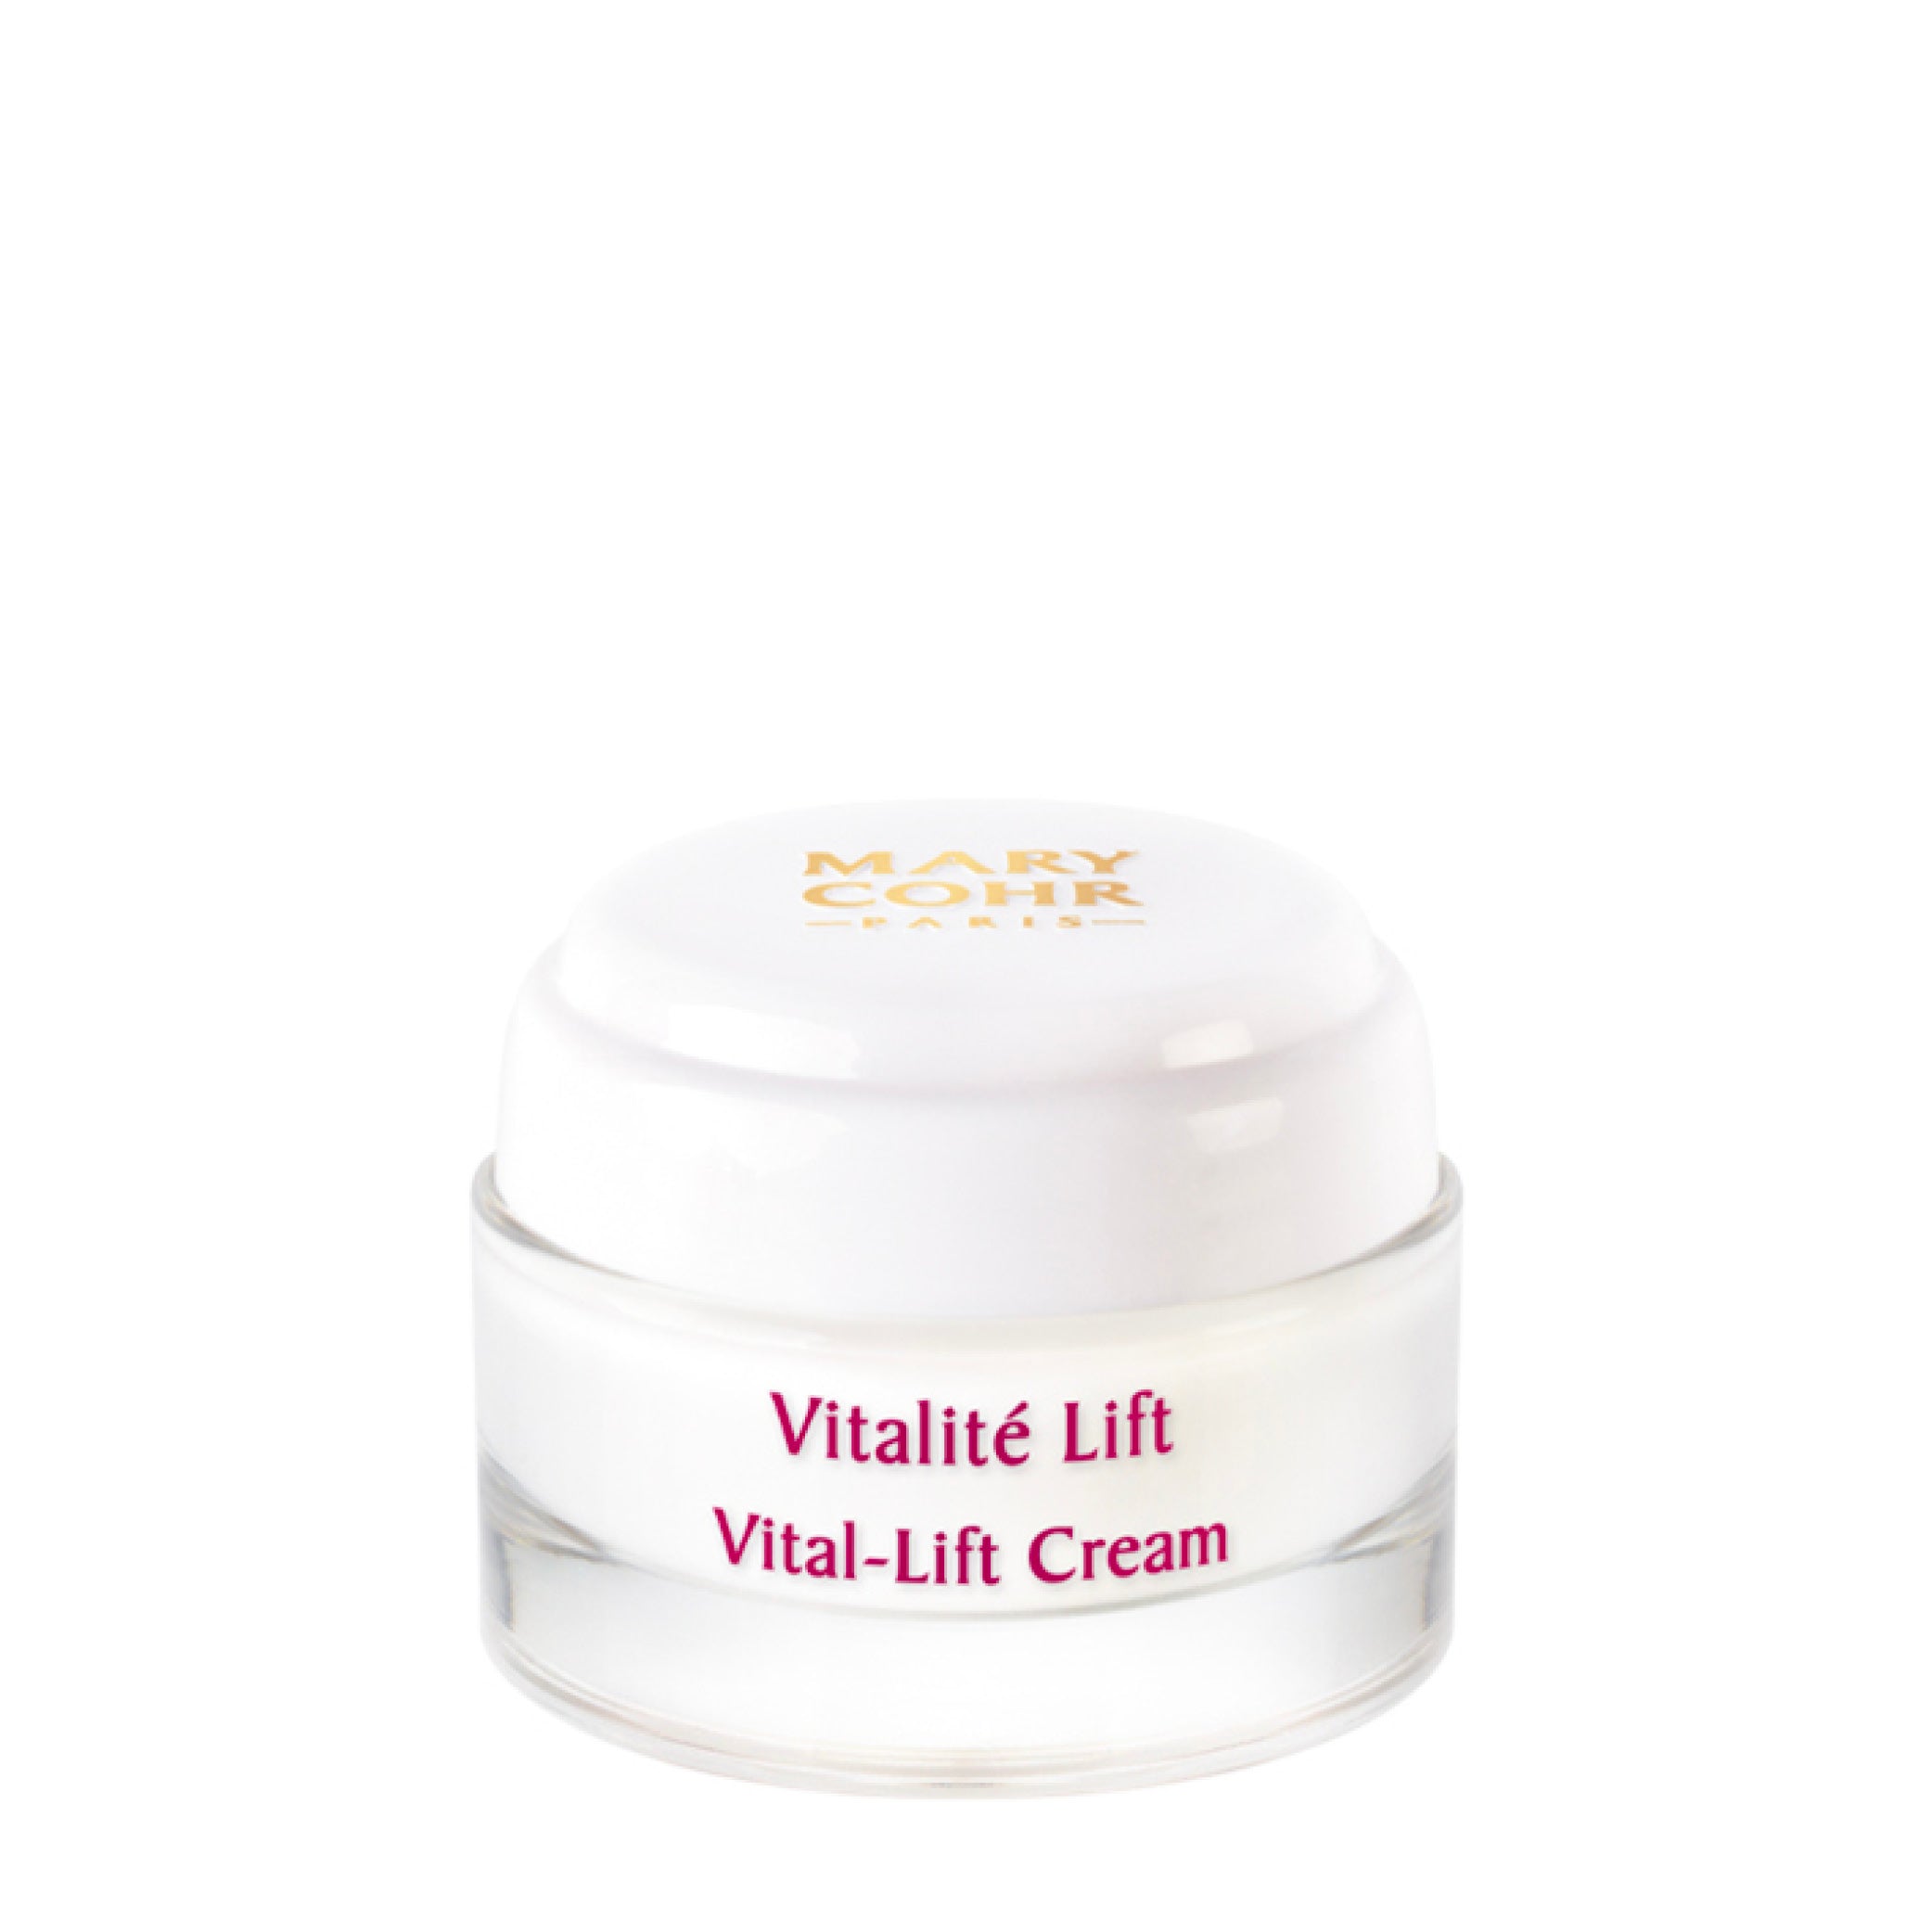 Vital-Lift Cream